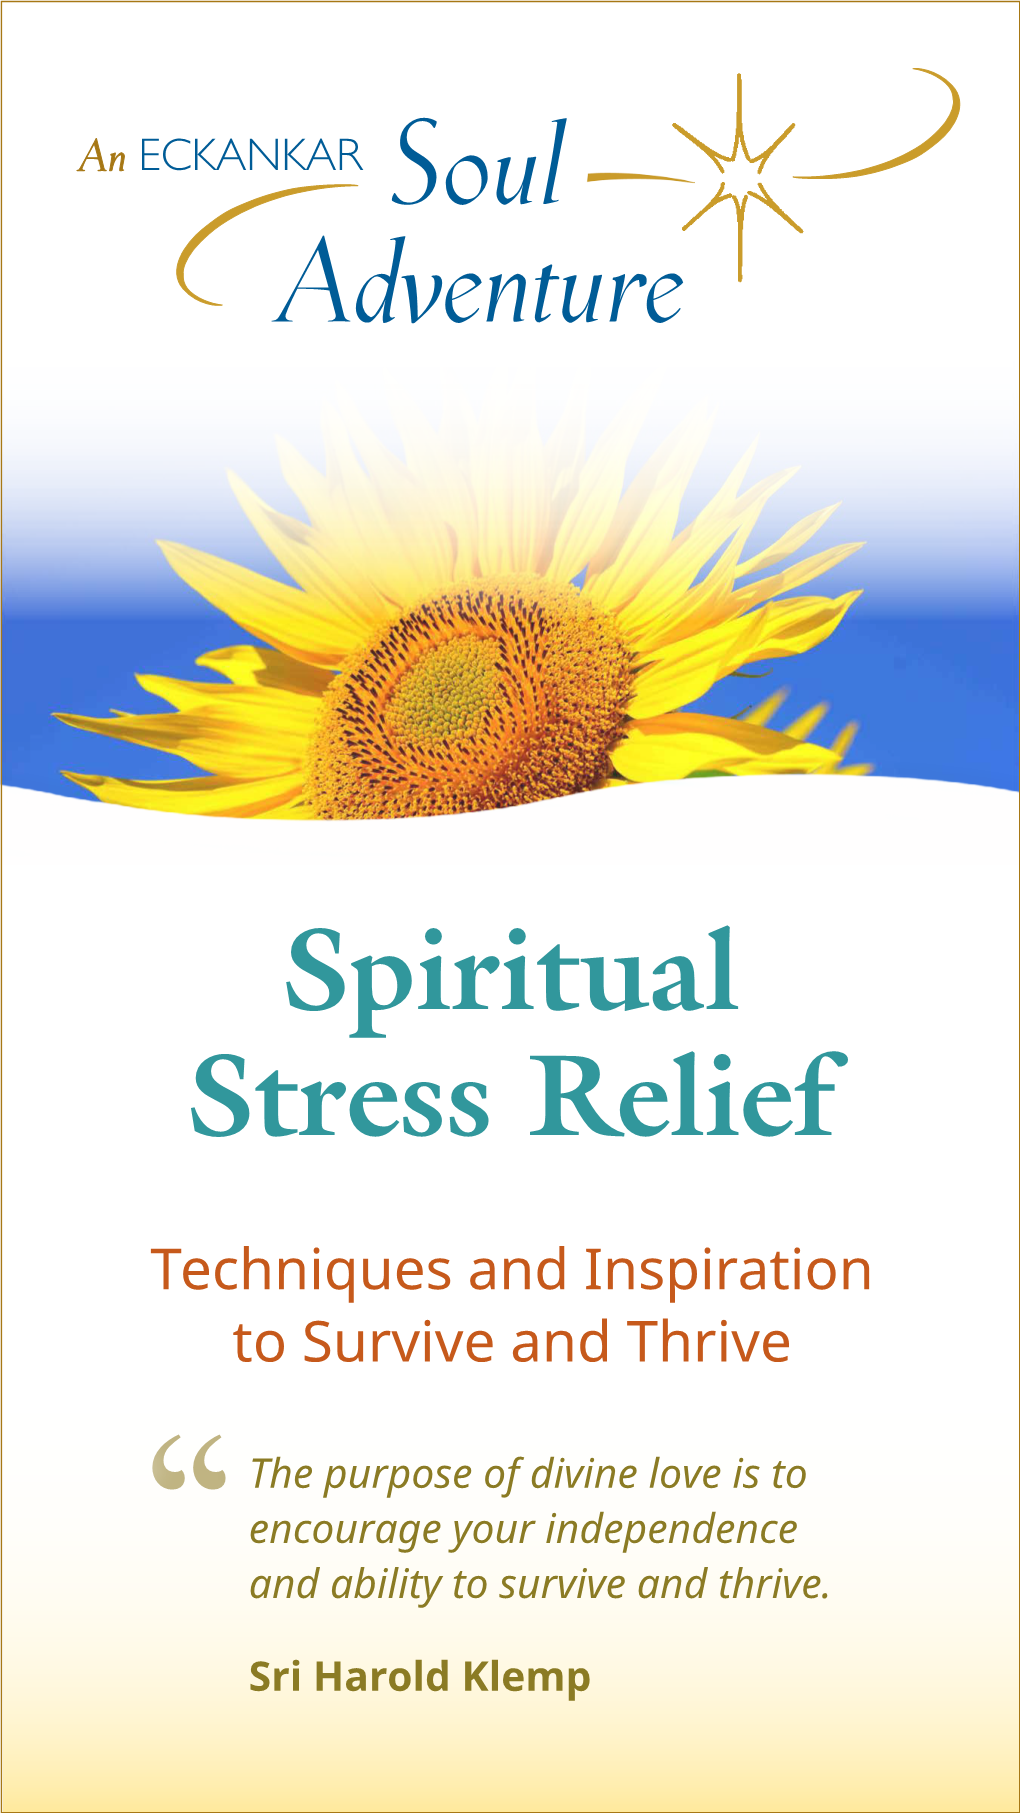 Spiritual Stress Relief